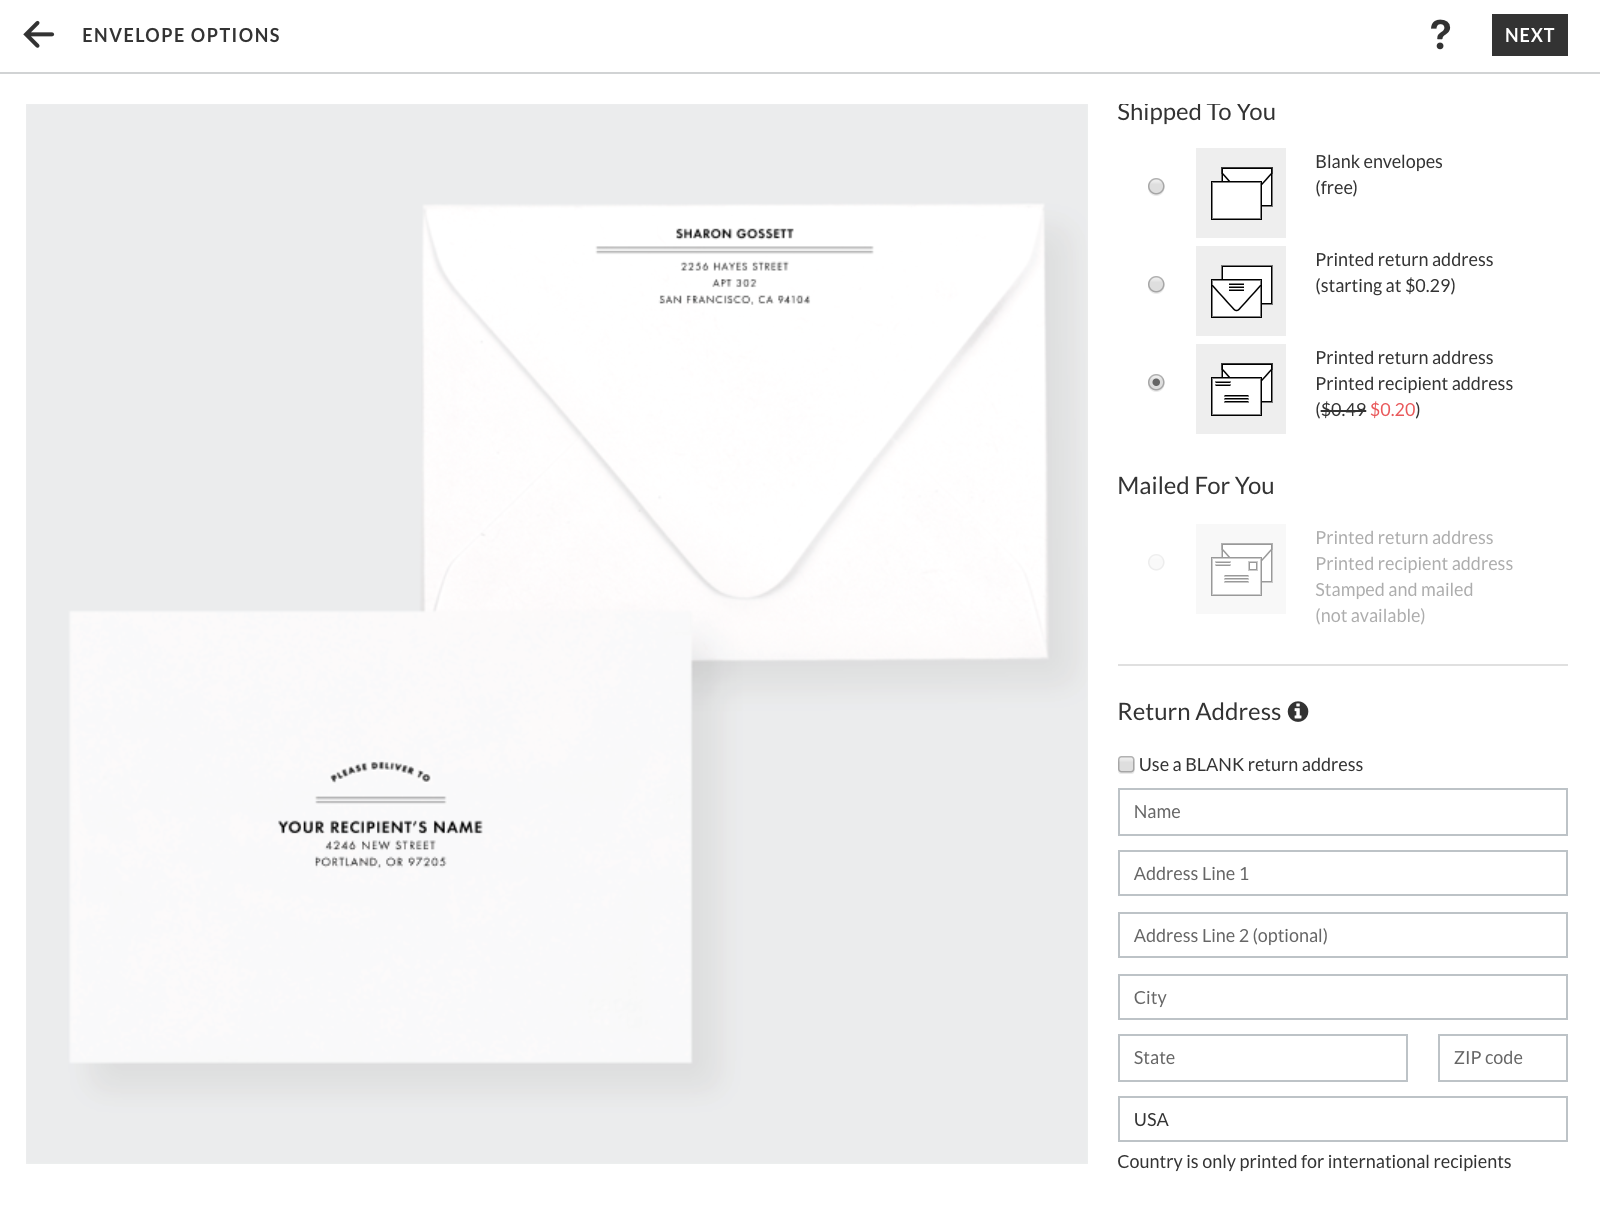 Envelopes_Design_As_shown.png